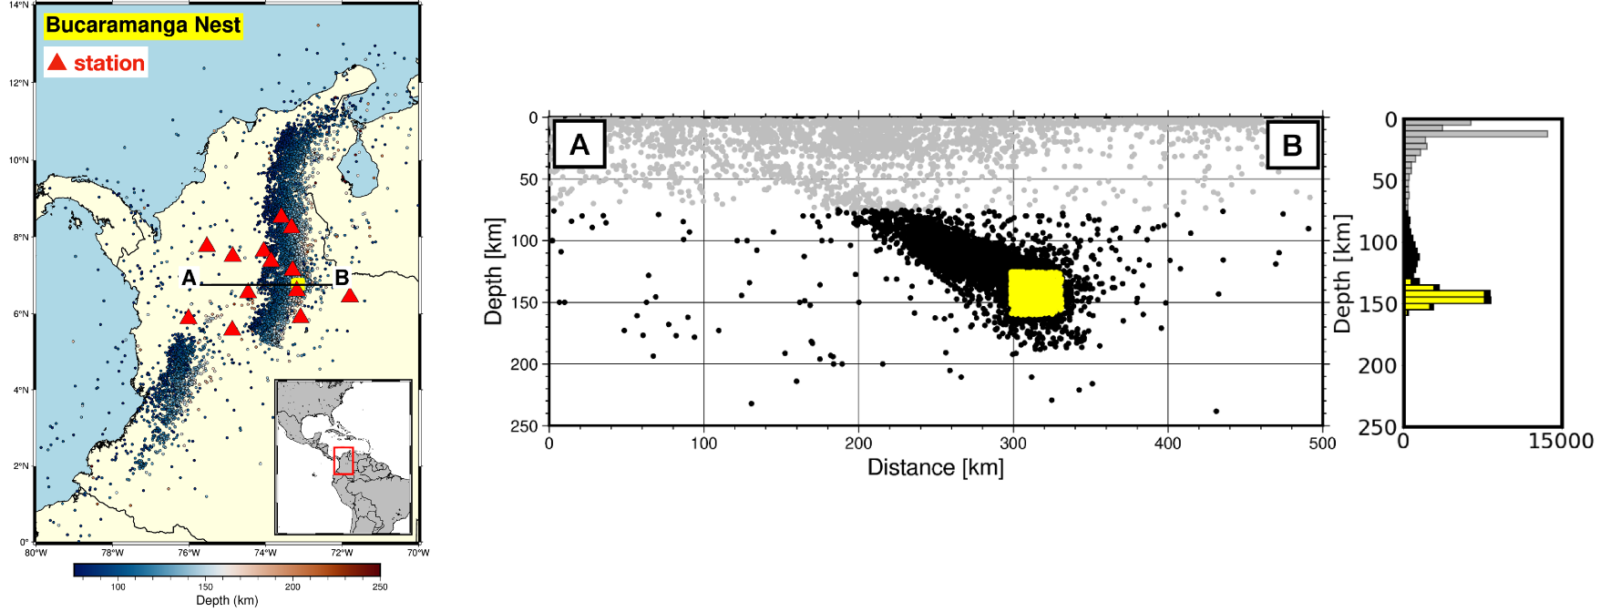 Seismicity in and around Bucaramanga Nest. Earthquake and station data from Servicio Geológico Colombiano. (Image Credit: Ayako Tsuchiyama)